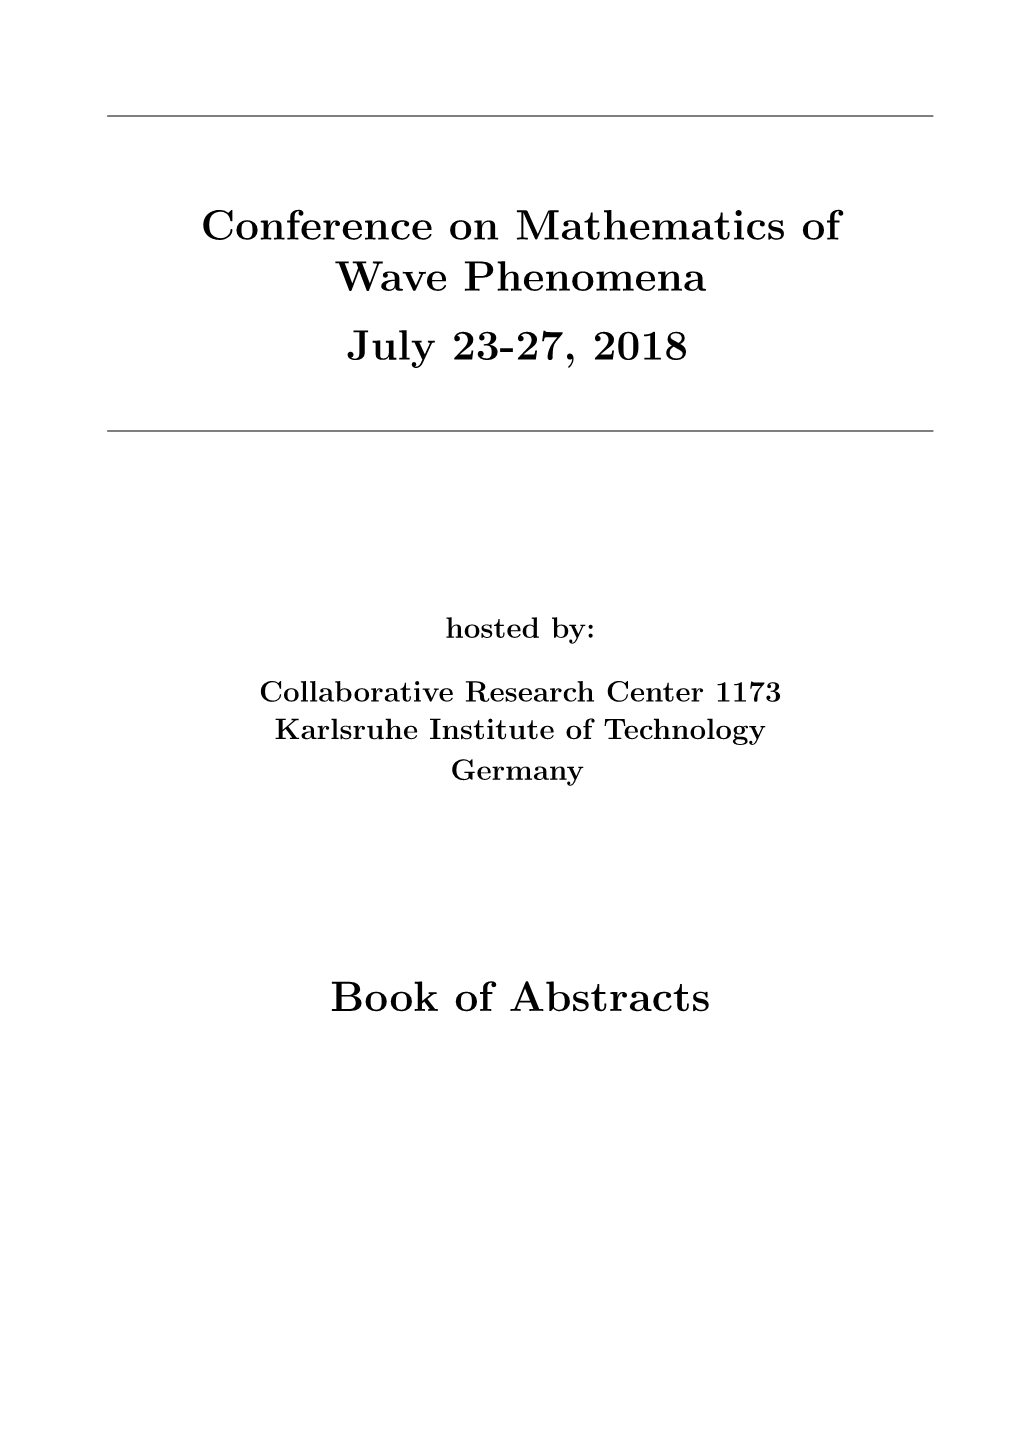 Conference on Mathematics of Wave Phenomena July 23-27, 2018 Book